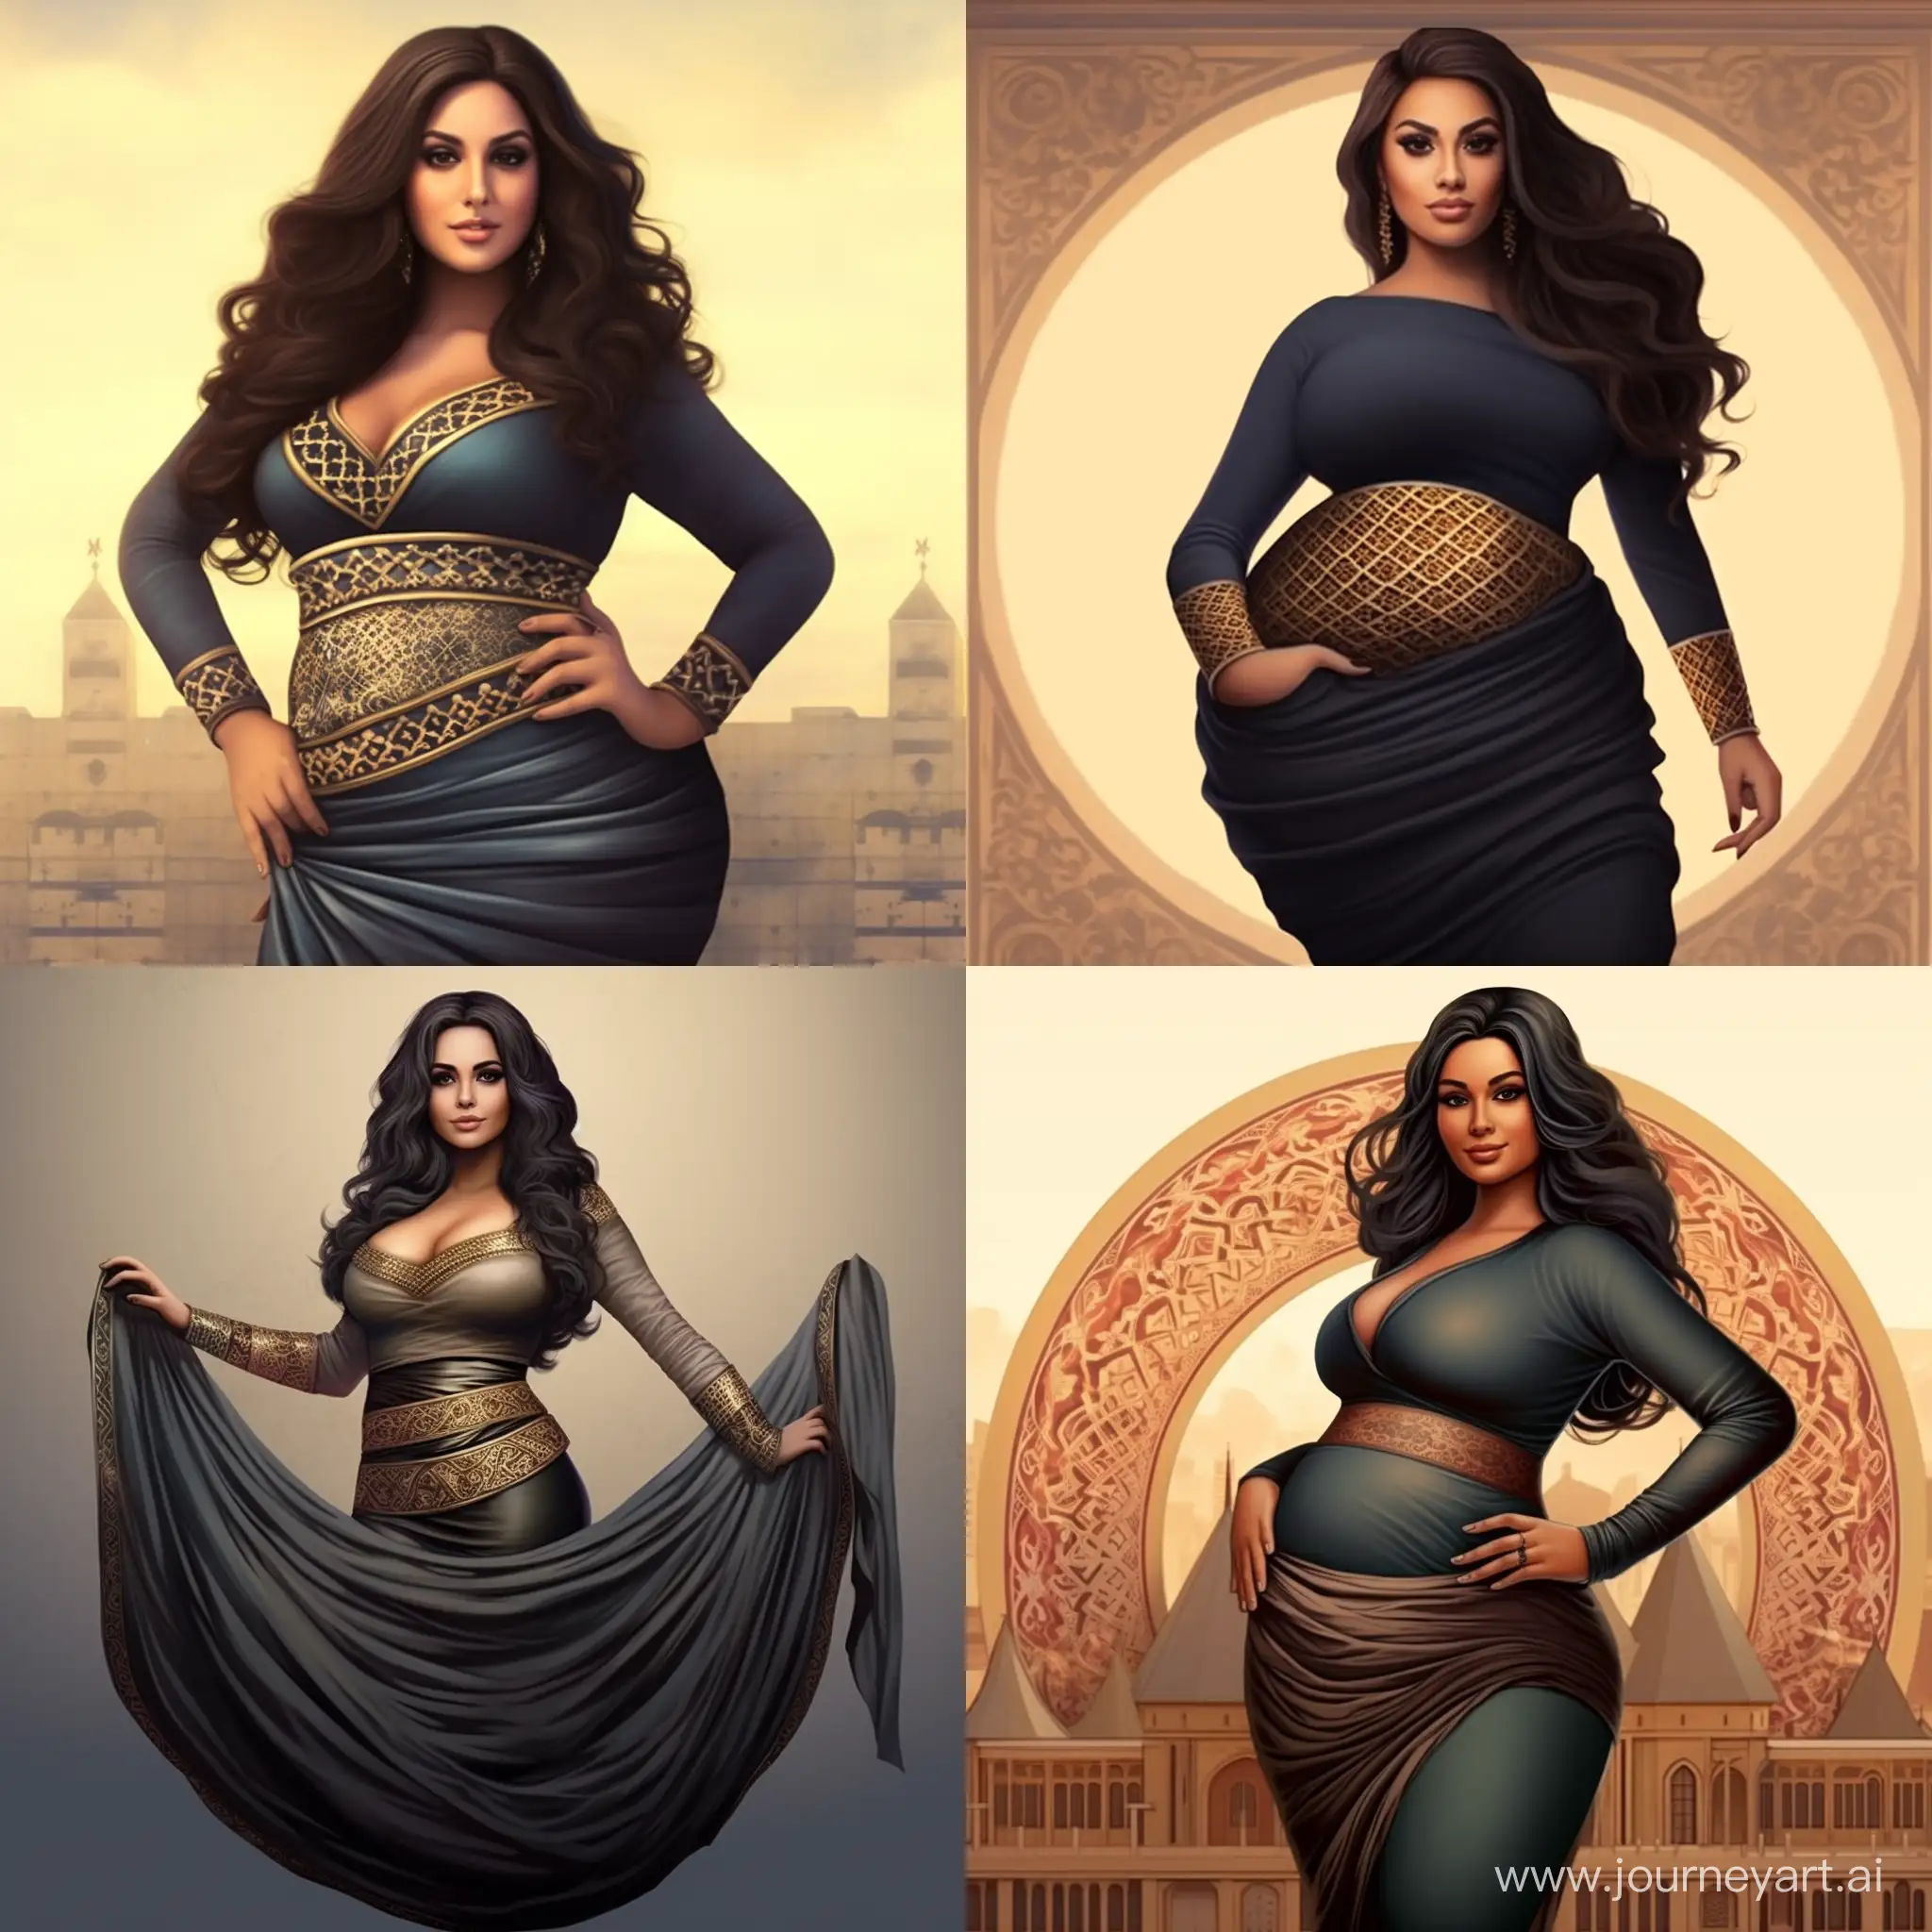 An Arab women curvy attractive body